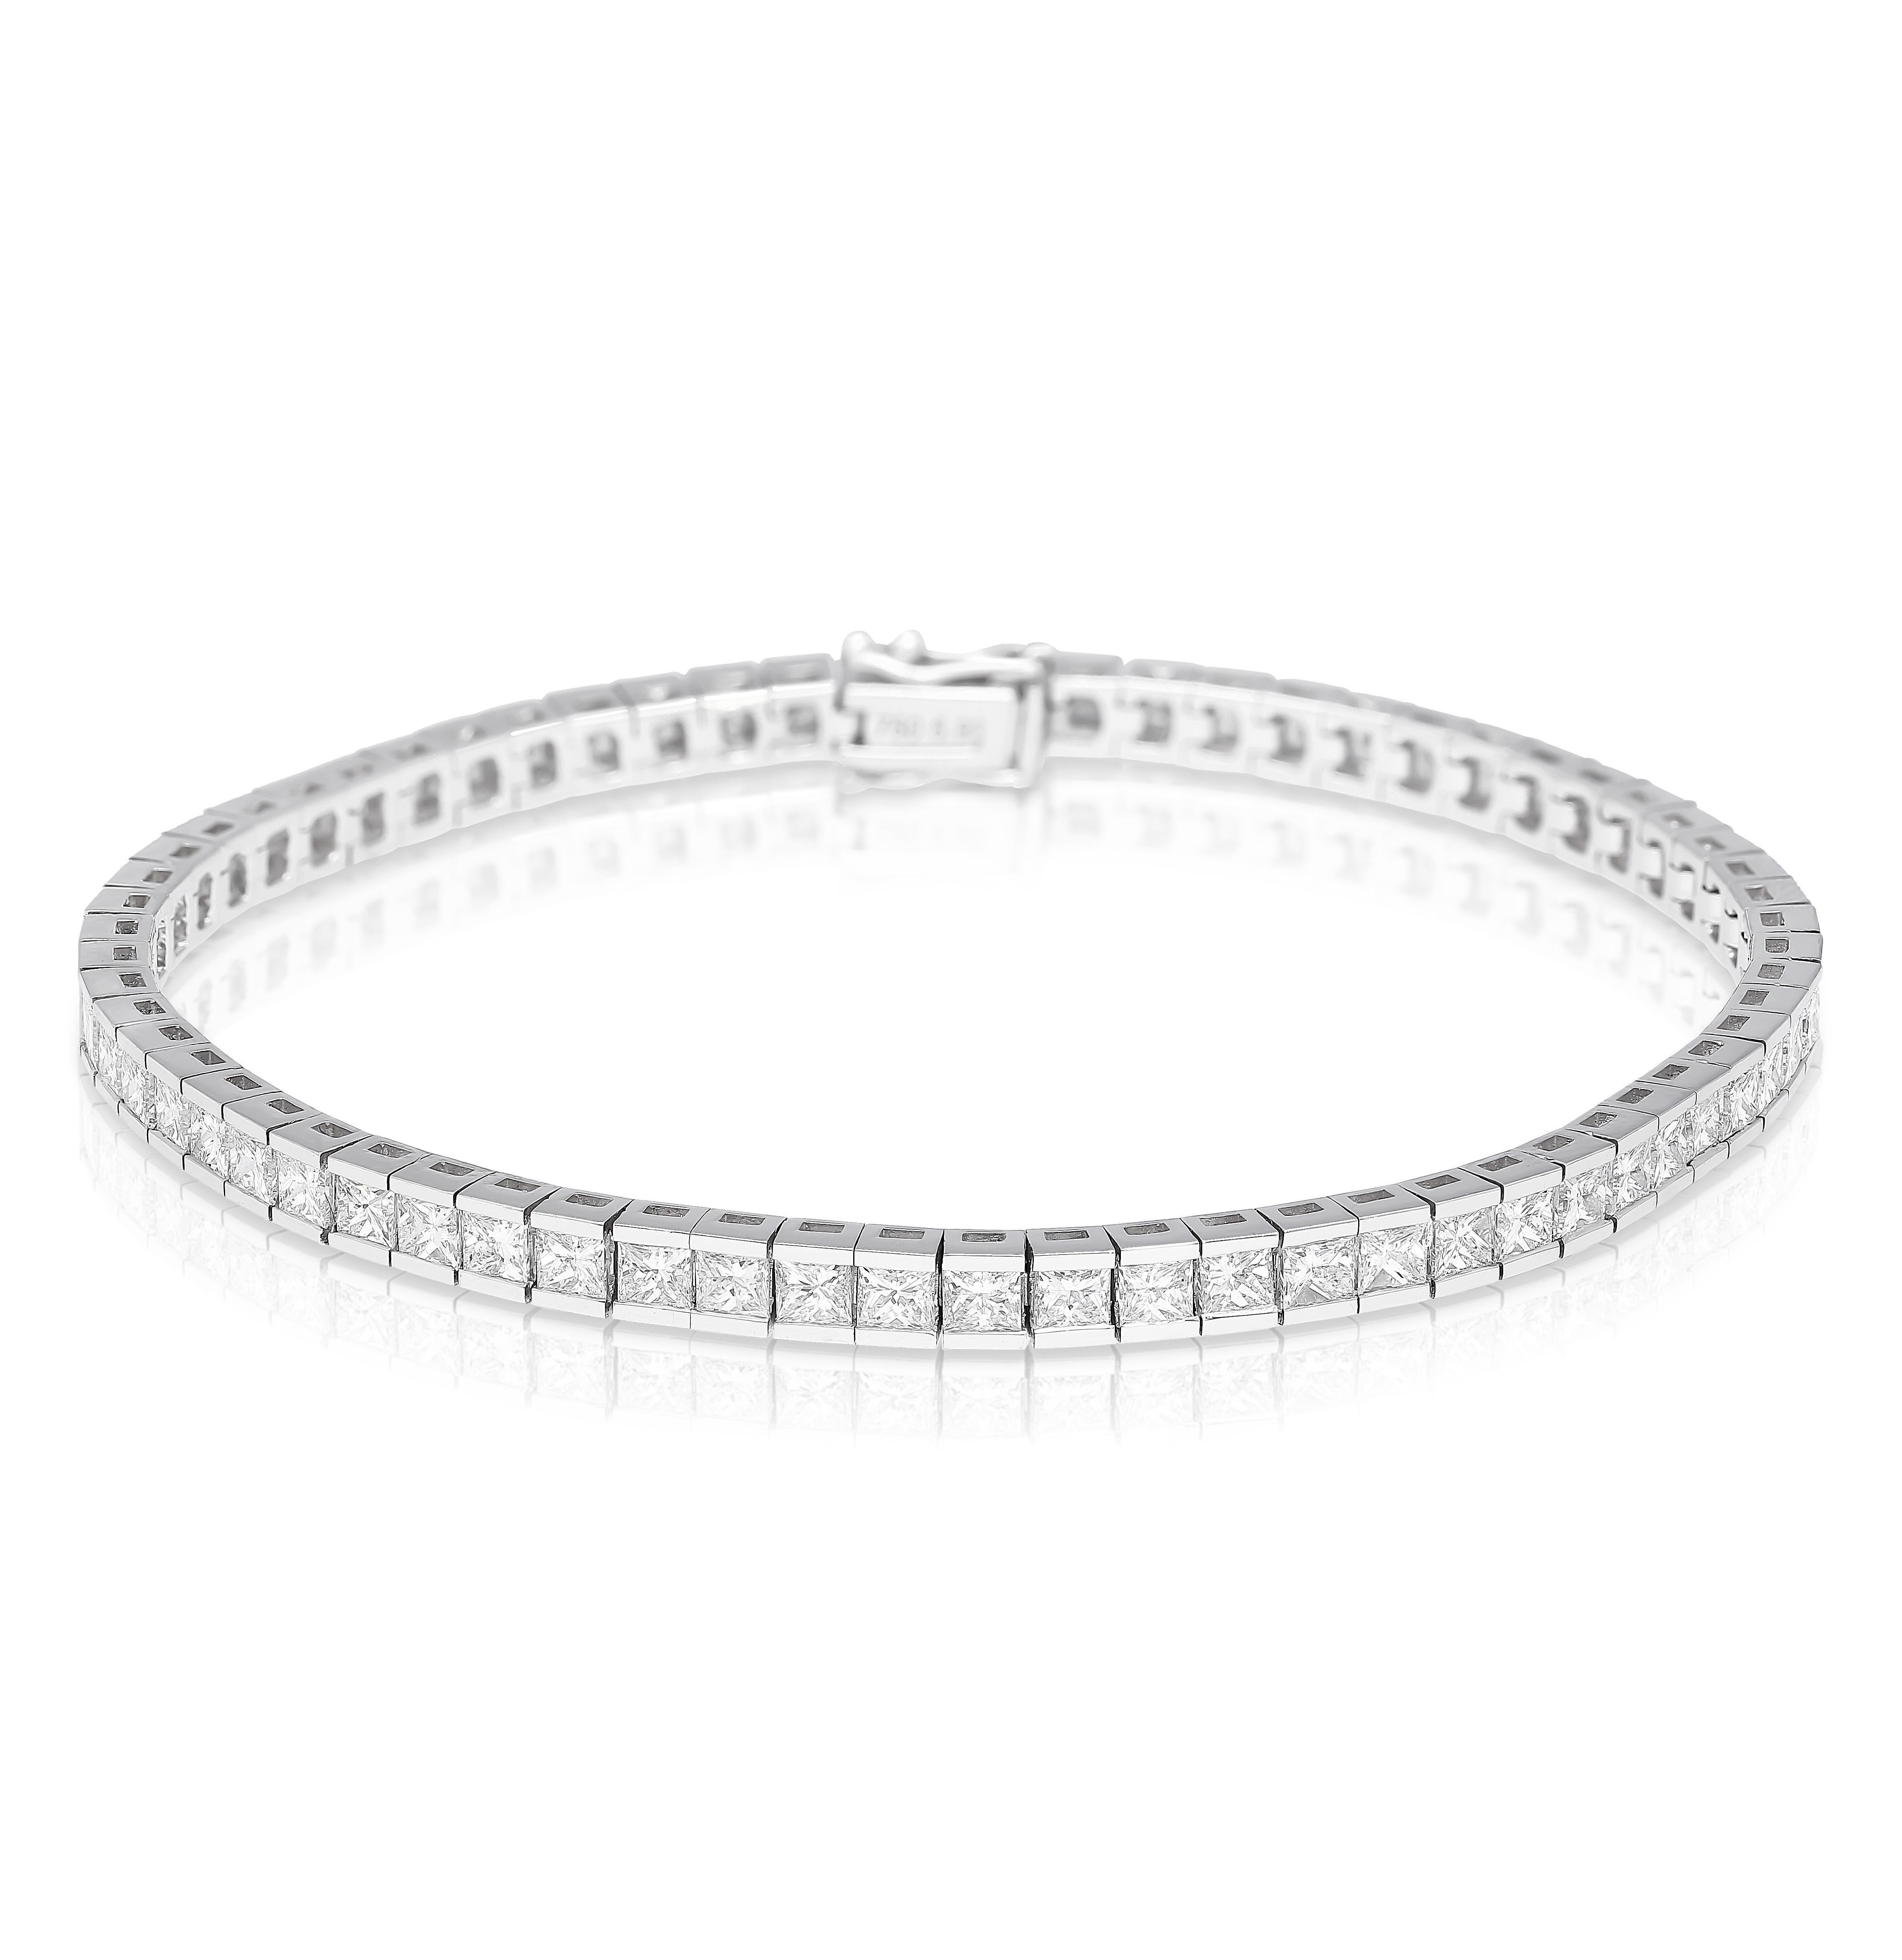 Women's or Men's 4.7 Carat Princess Cut Diamond Half Bezel Tennis Bracelet in 18K White Gold 7